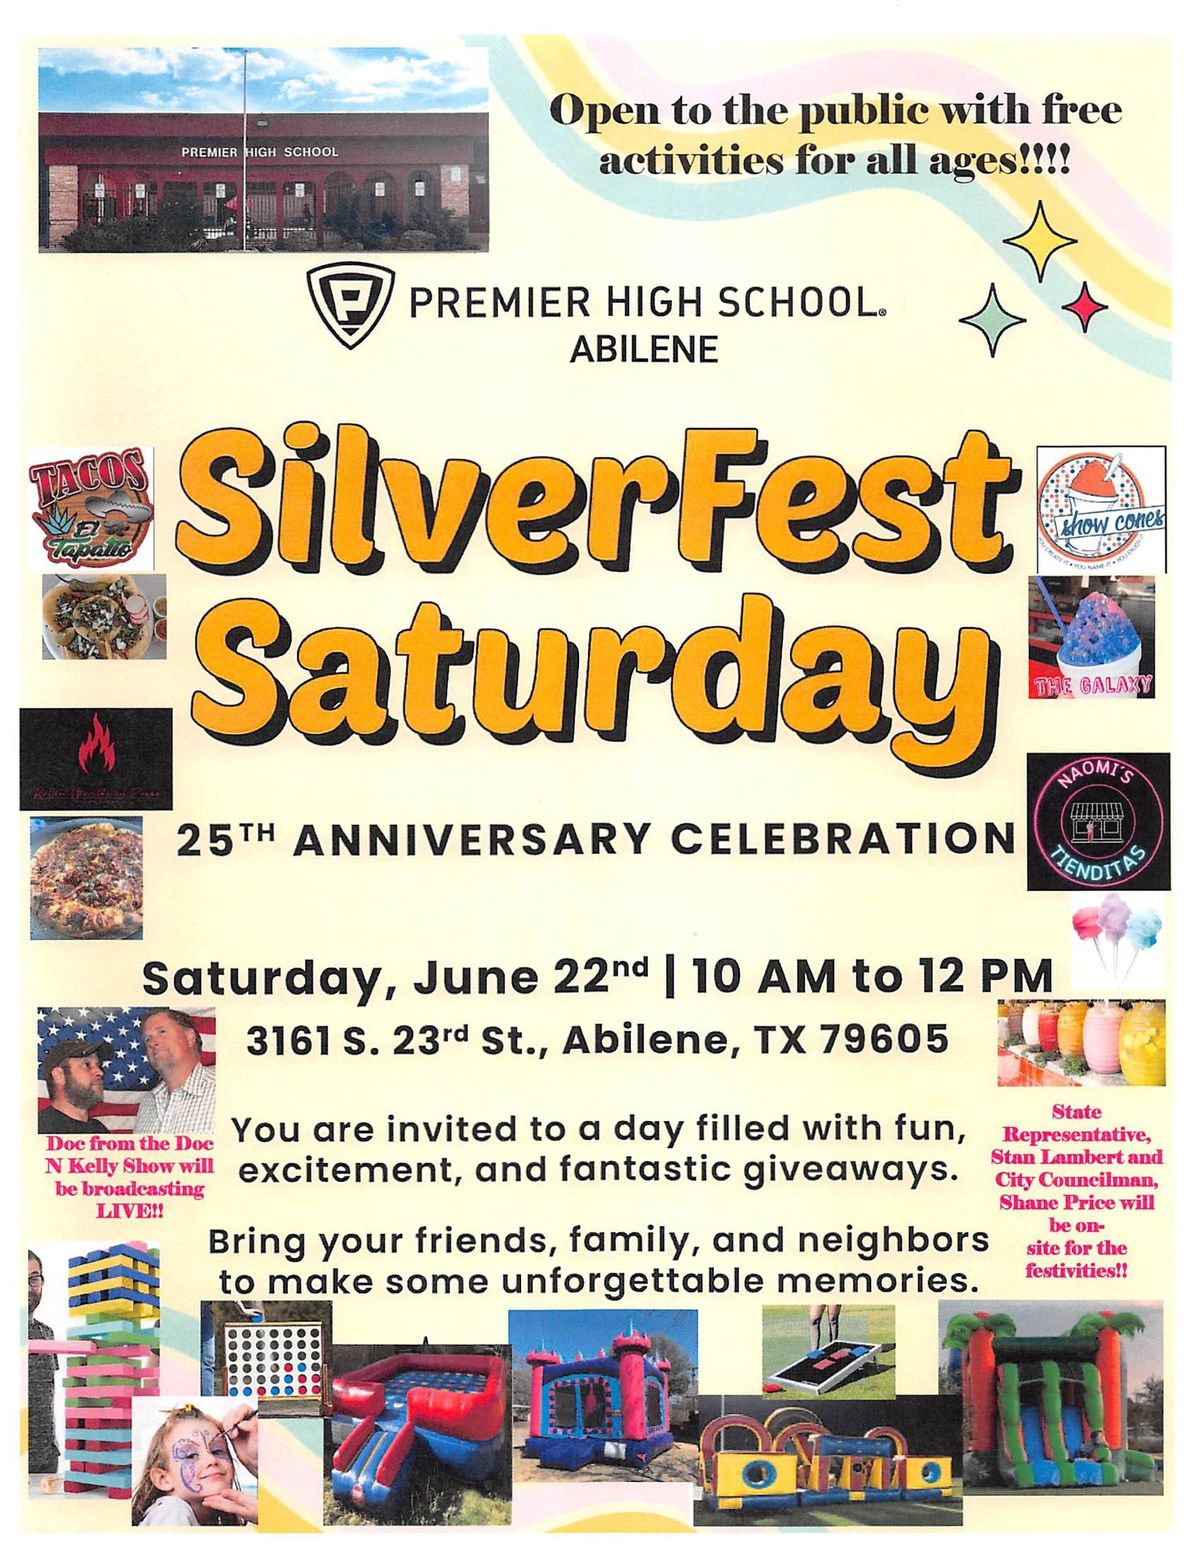 SilverFest Saturday: Premier High School - Abilene 25th Anniversary Celebration